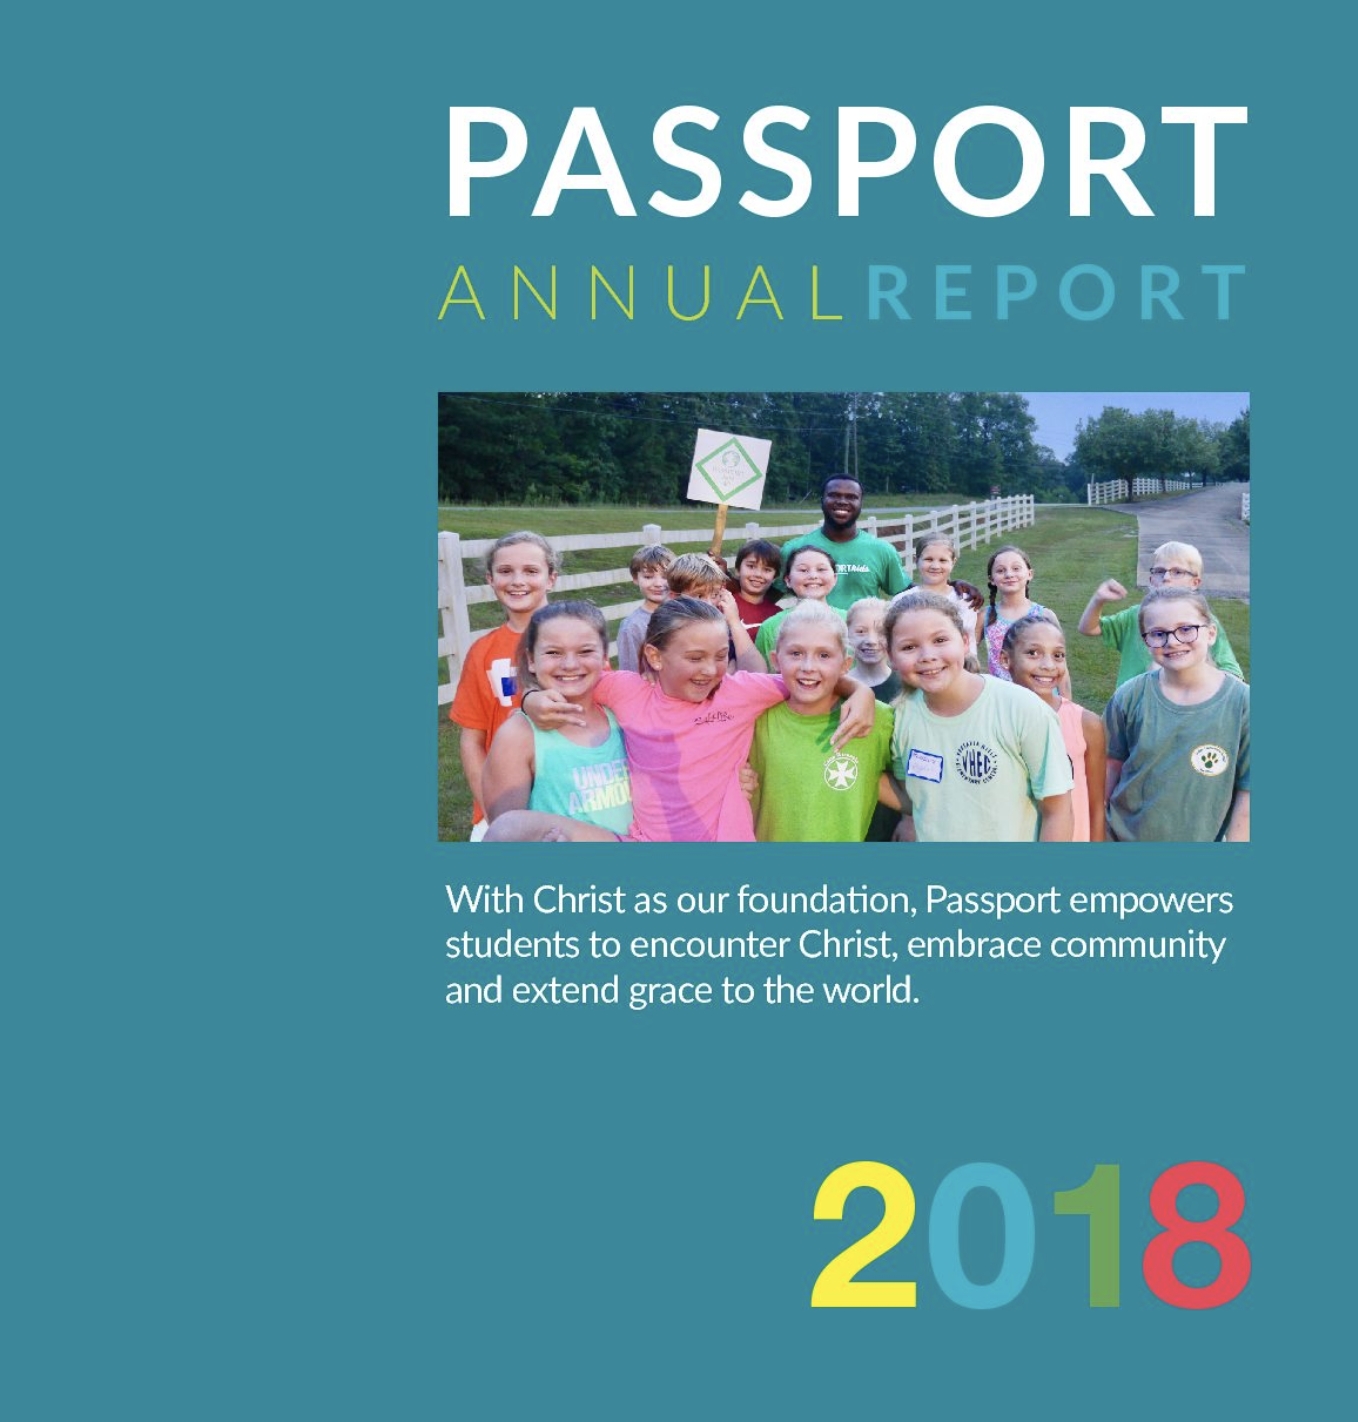 PASSPORT 2014 Annual Report